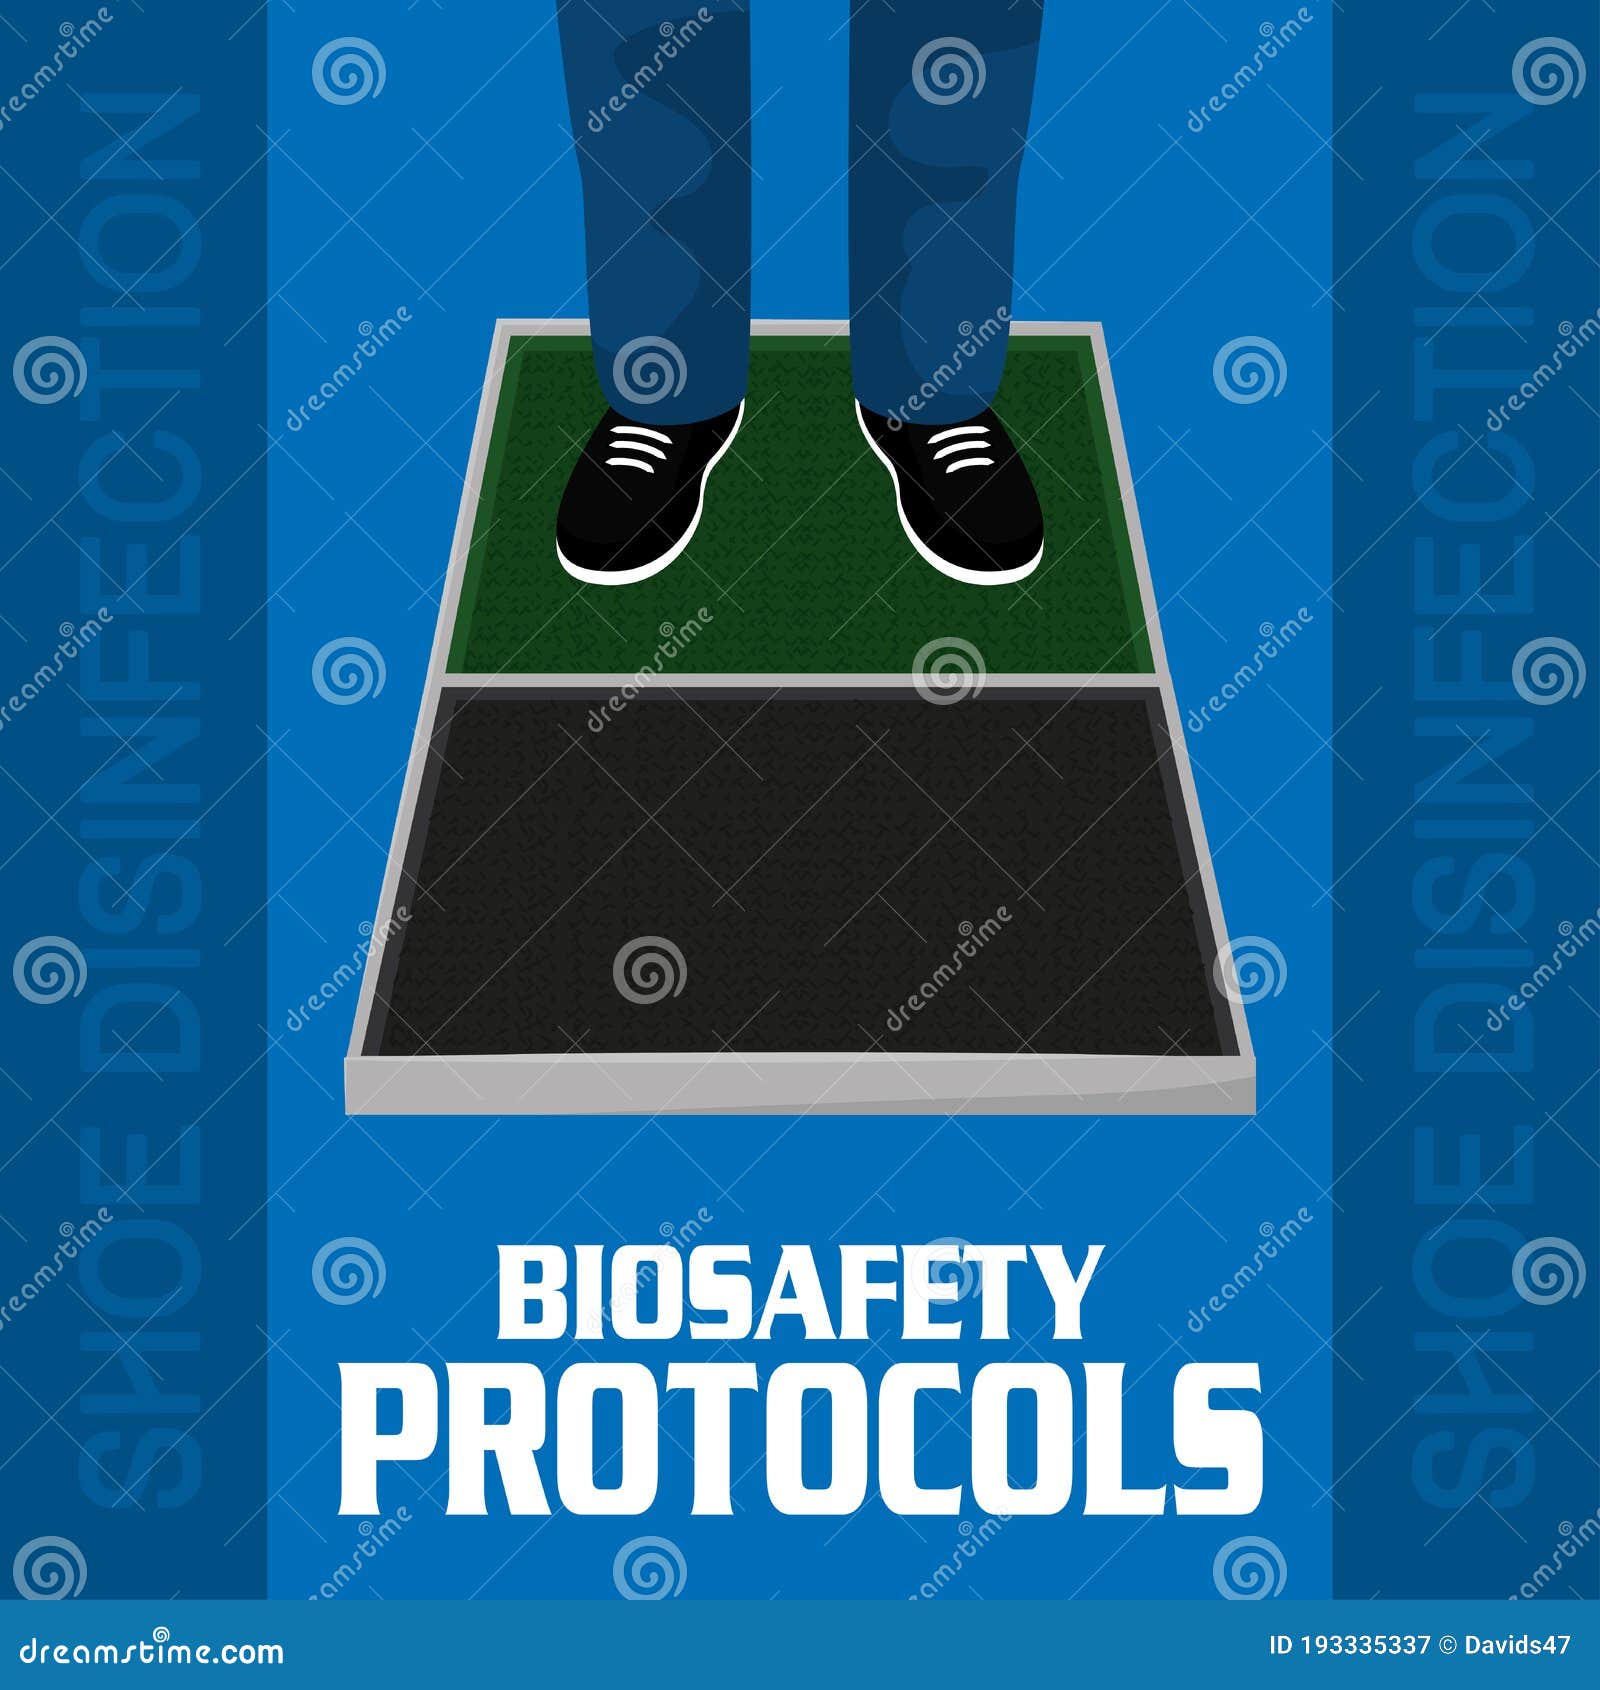 biosafety protocols poster